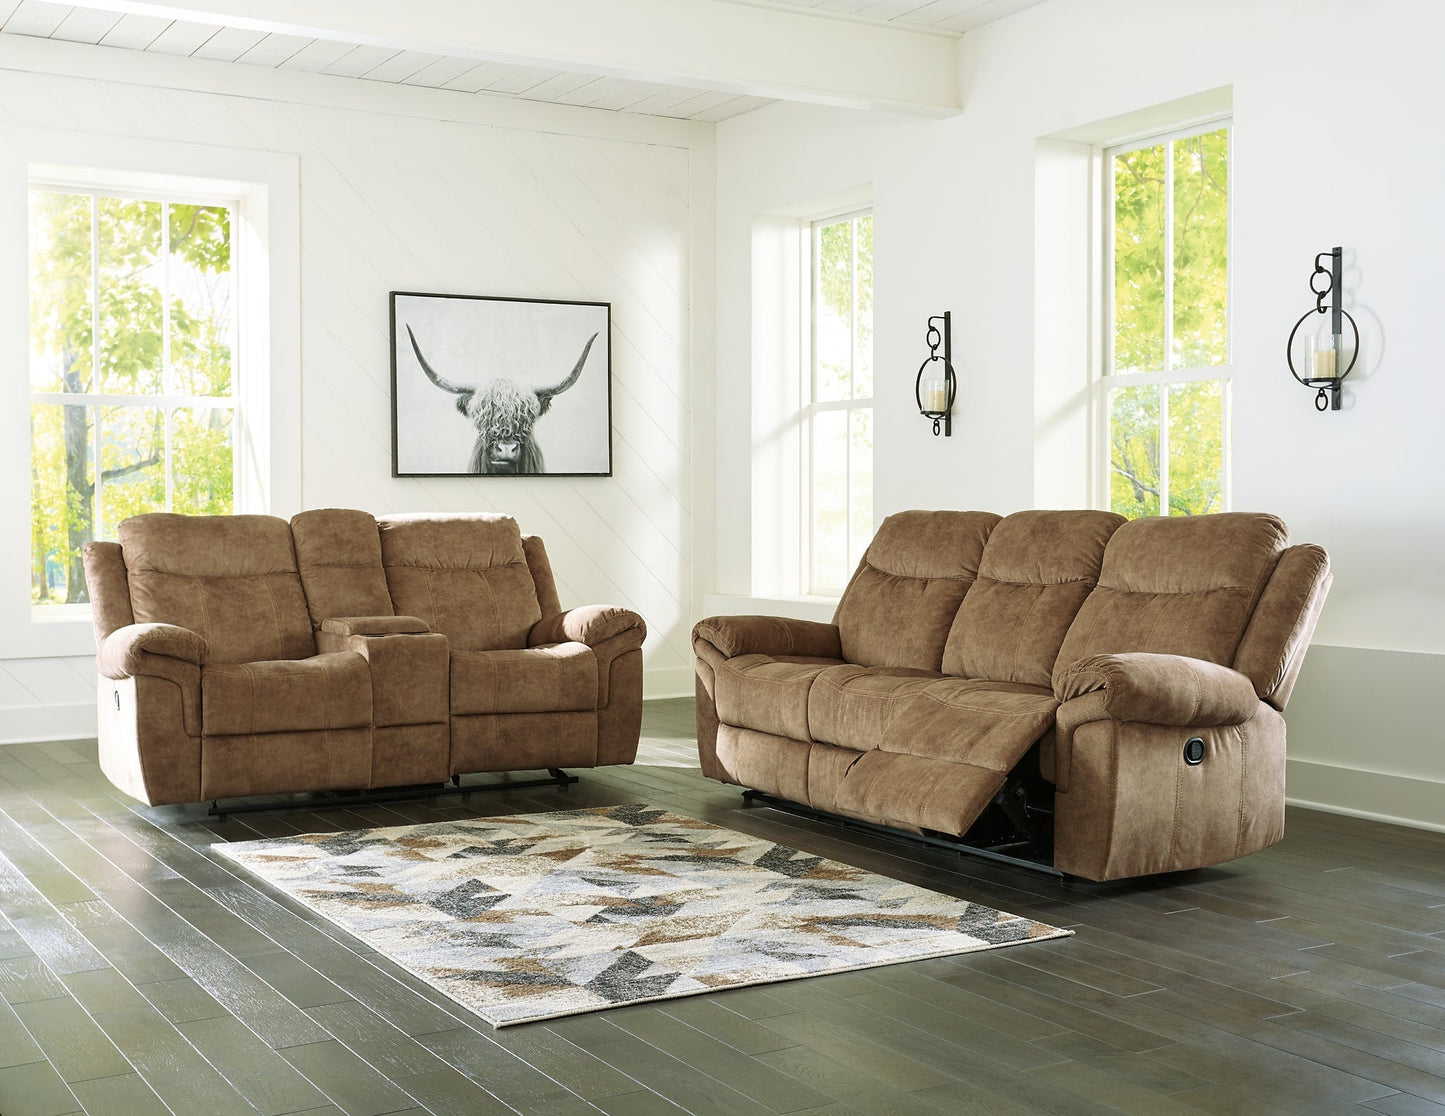 Huddle-Up Sofa and Loveseat at Cloud 9 Mattress & Furniture furniture, home furnishing, home decor